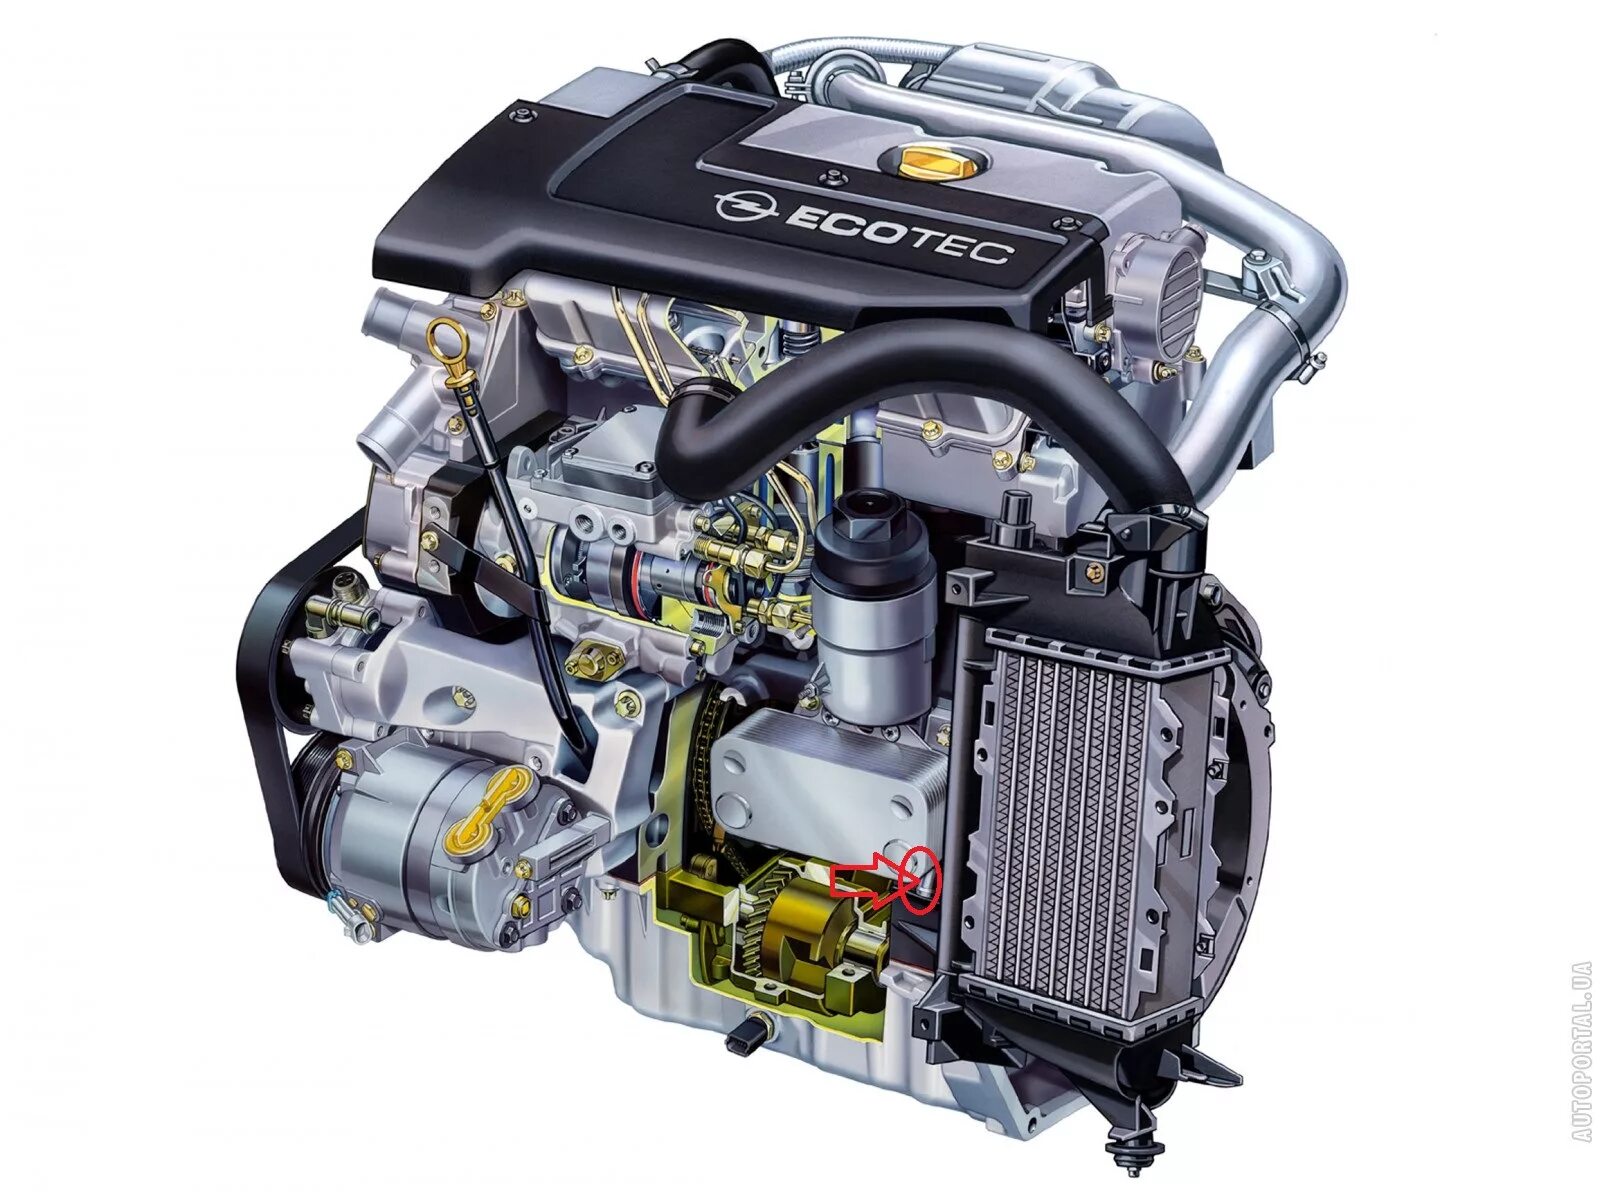 Opel Motor 2.2. Opel ECOTEC 2.2. Opel 2.0 DTI двигатель. Двигатель Экотек Опель дизель 2.0.